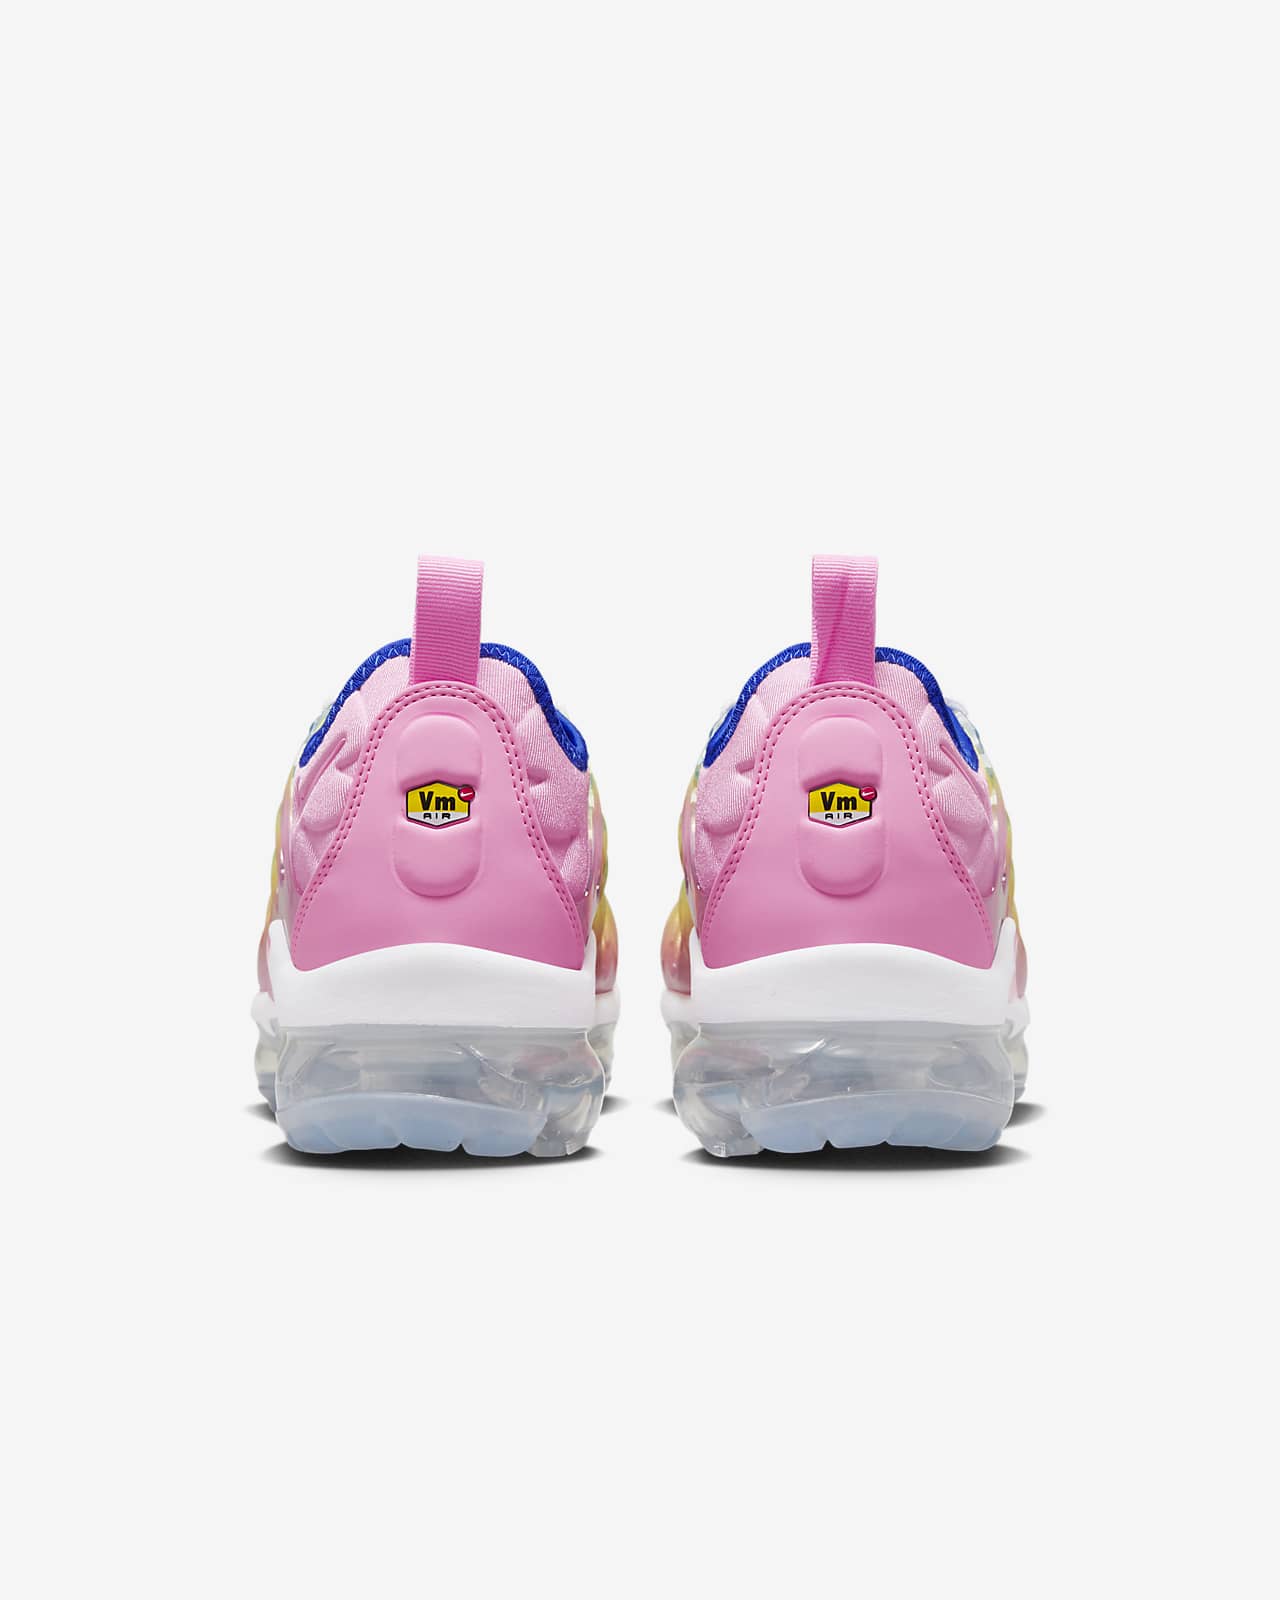 Nike Air VaporMax Plus Hyper Pink/White/Pink Blast Women's Shoe